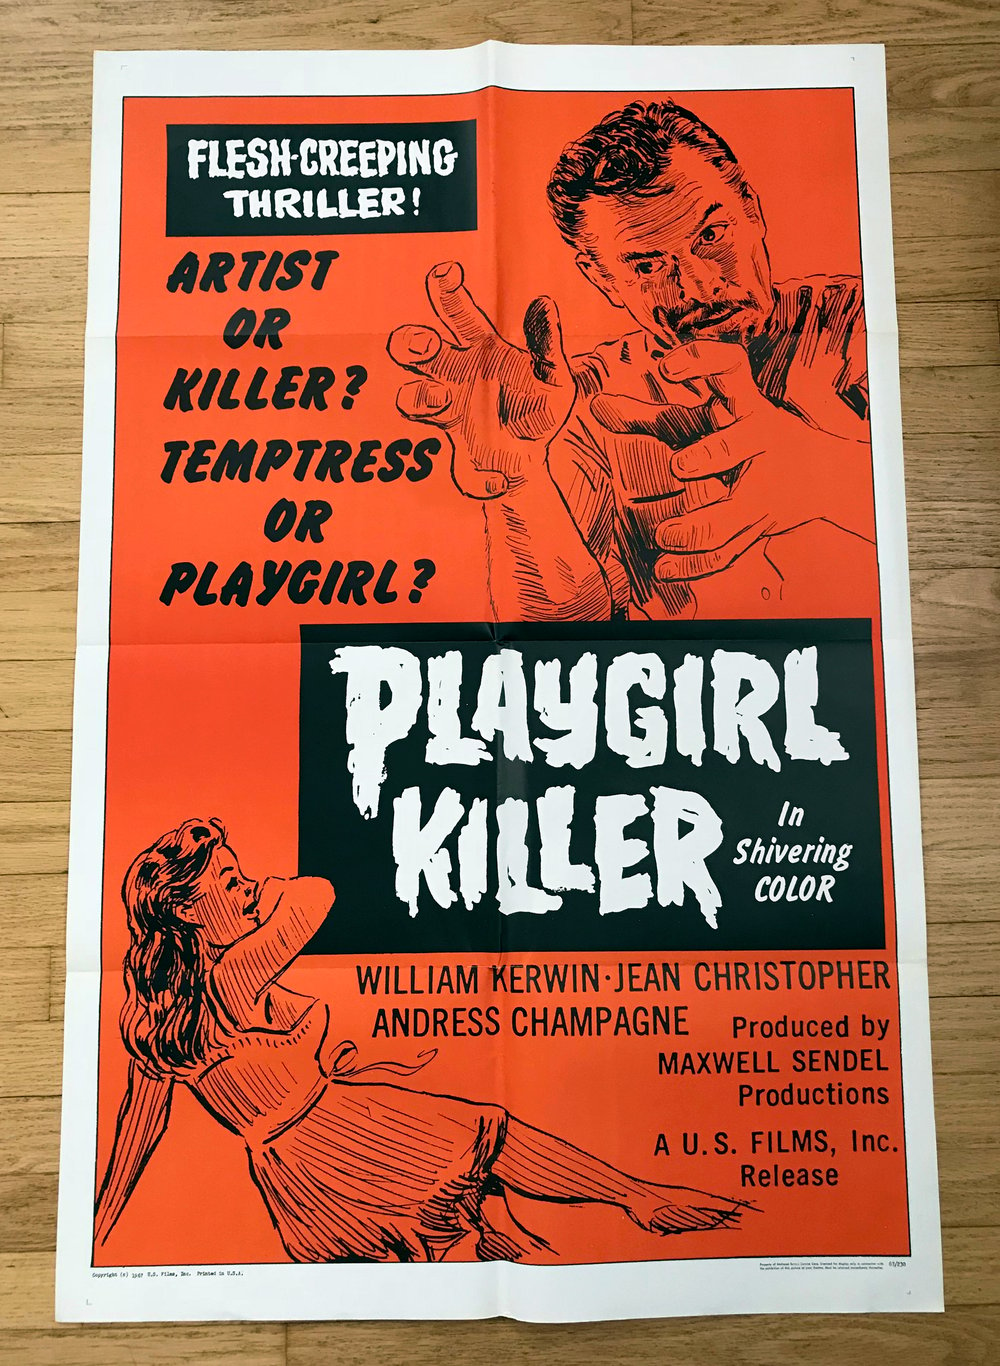 1967 PLAYGIRL KILLER Original U.S. One Sheet Movie Poster